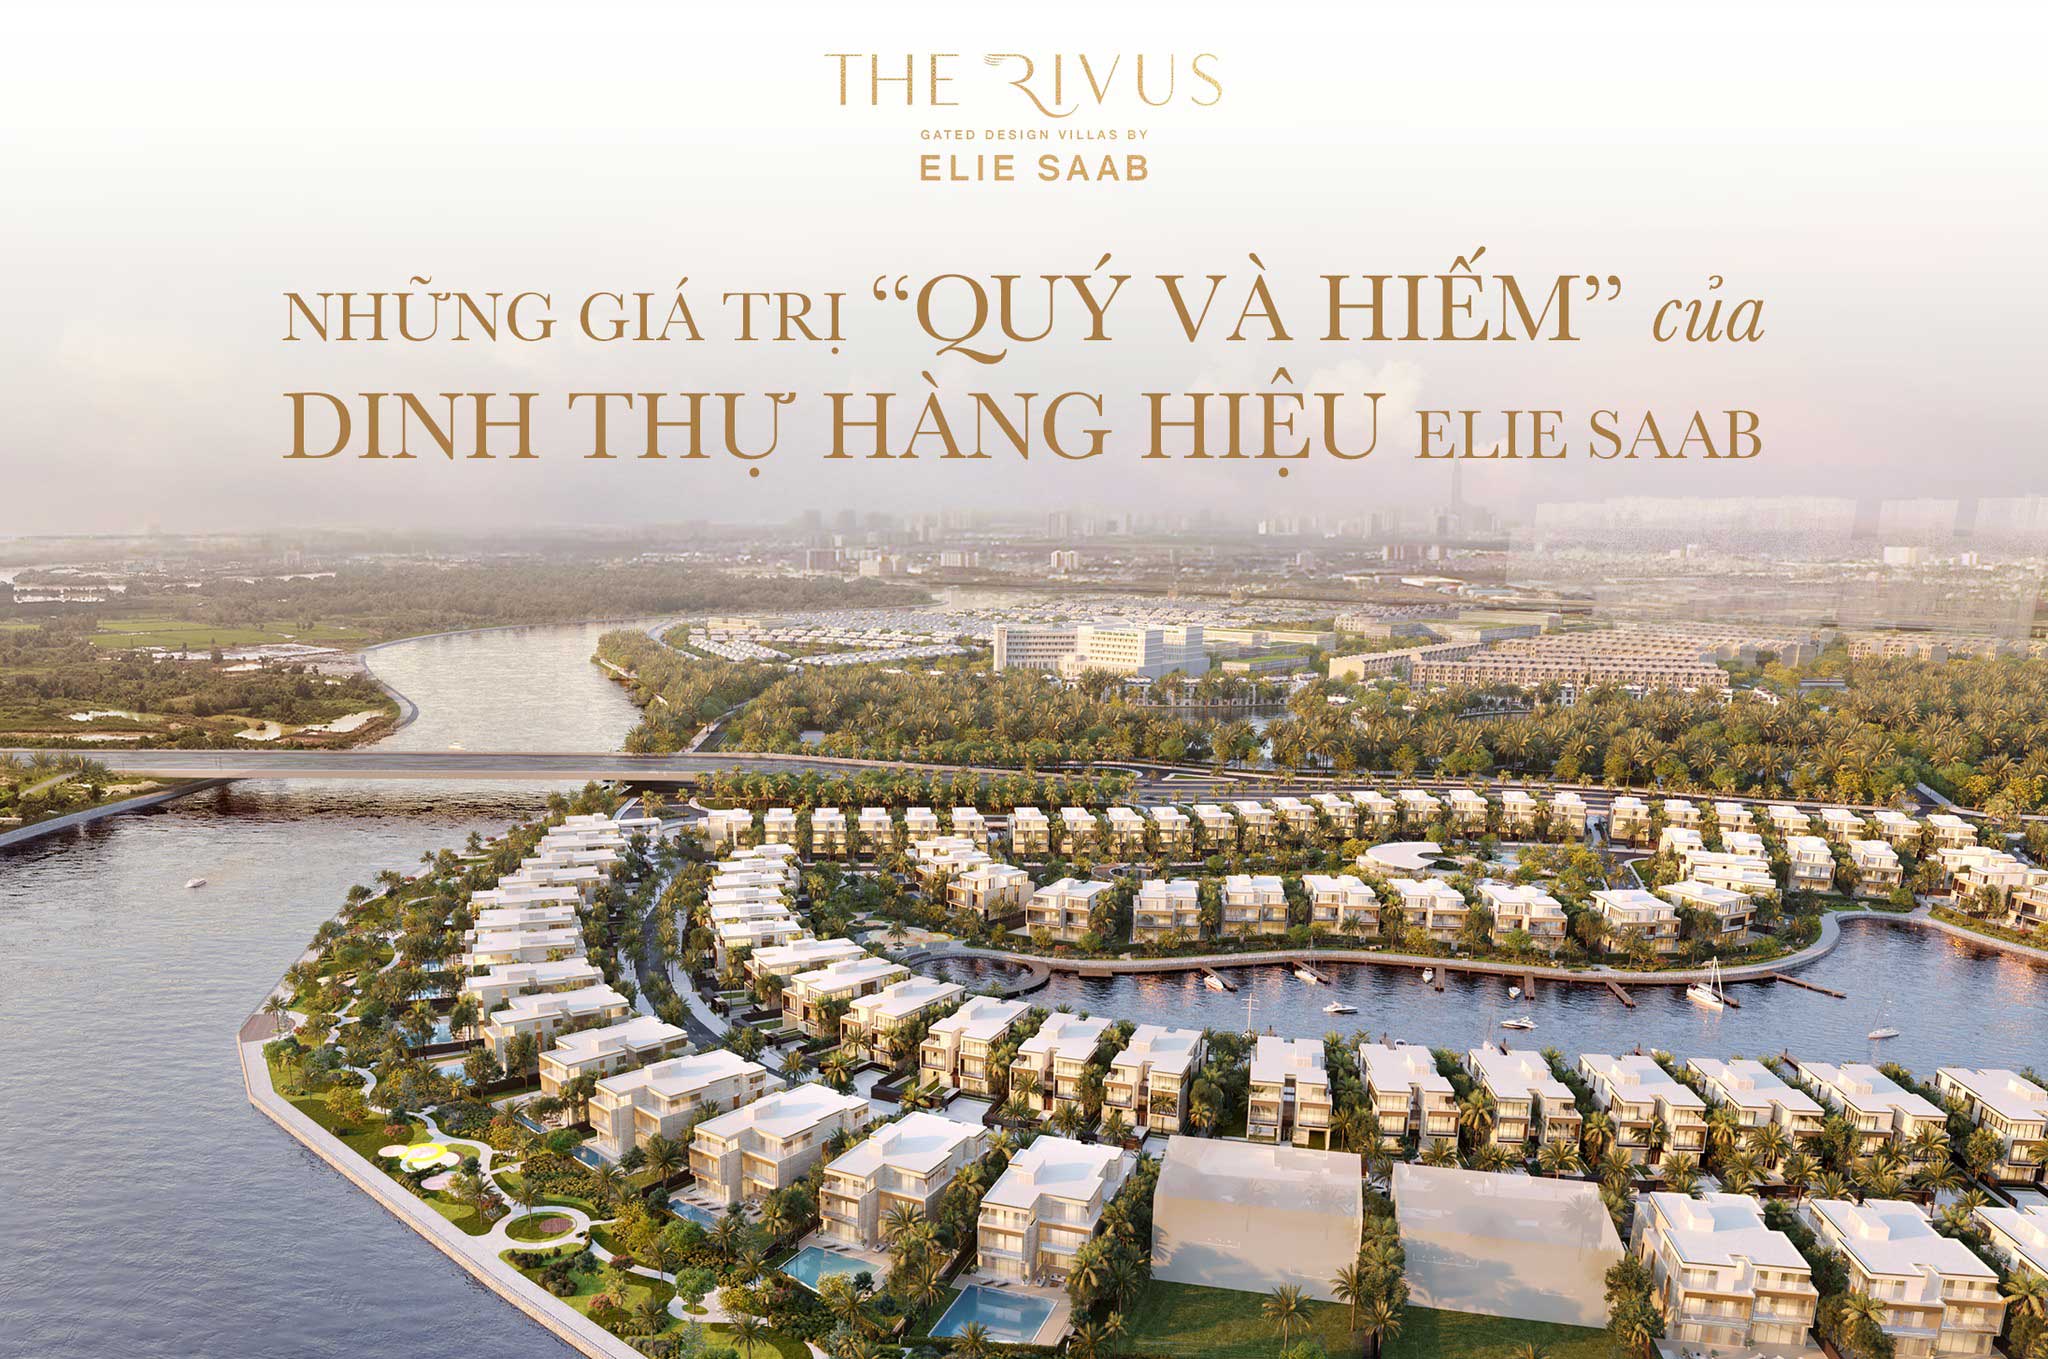 The Rivus - Gated Design Villas By ELIE SAAB